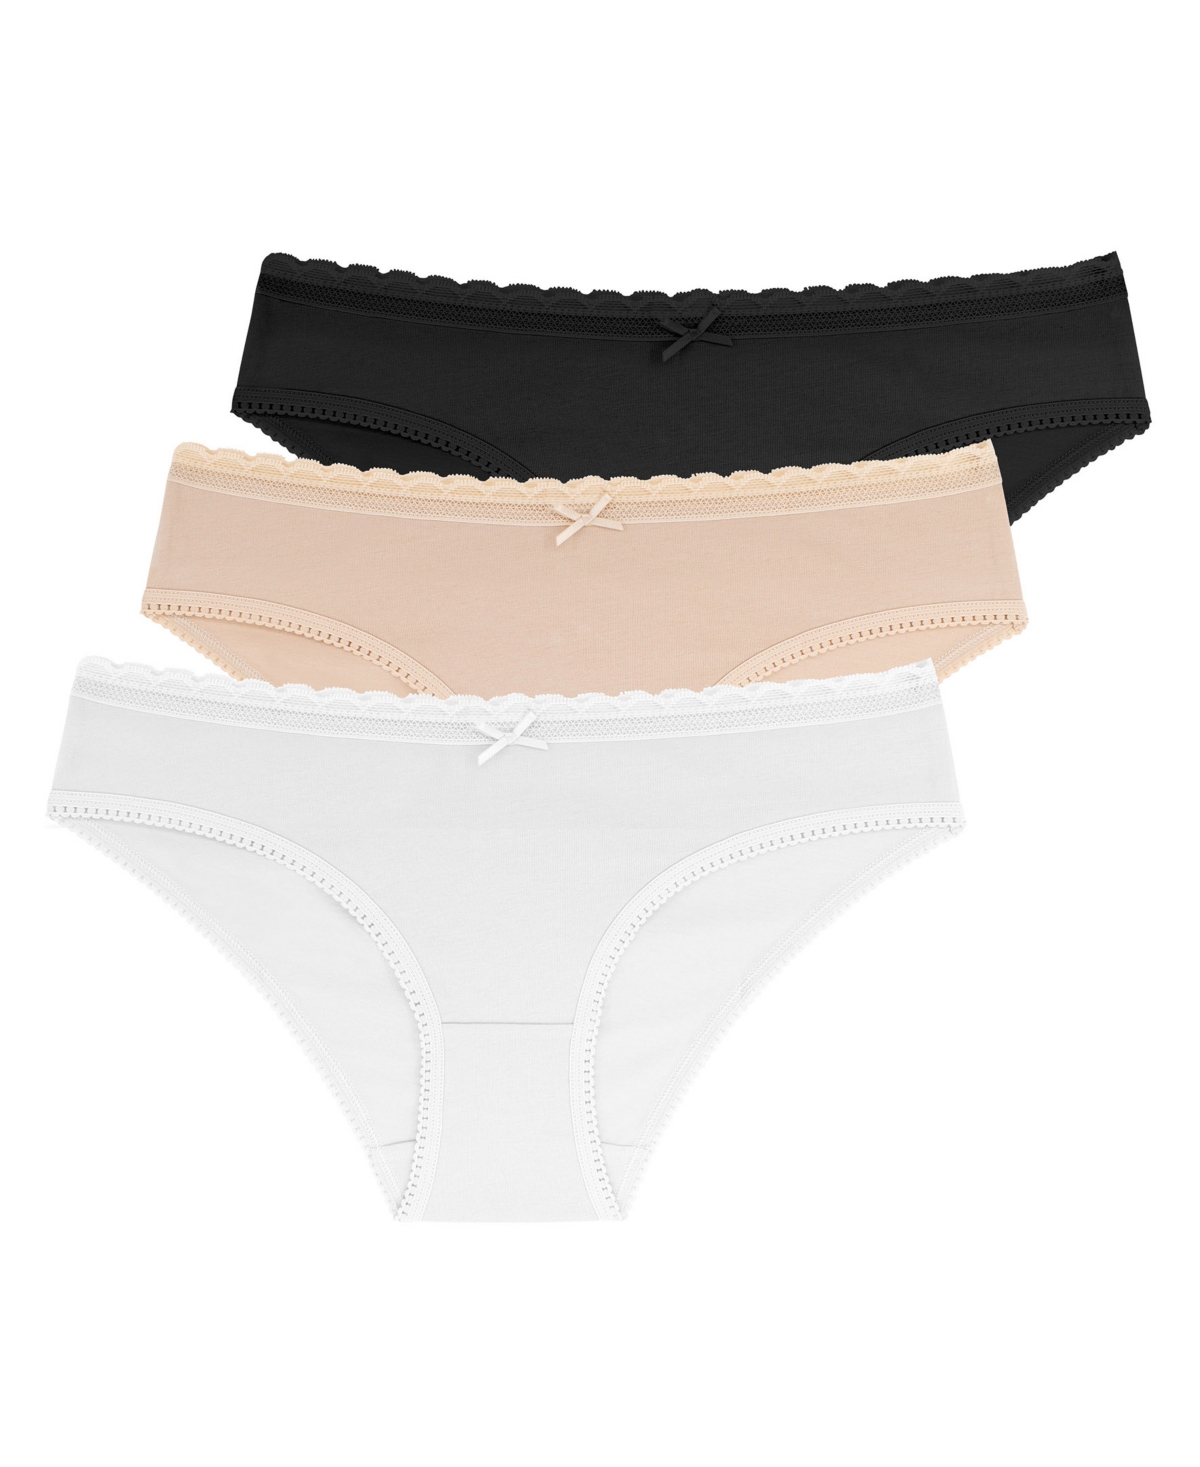 Women's Naomi 3 Pack Soft Cotton Brief Panties - Ivory, Beige, Black